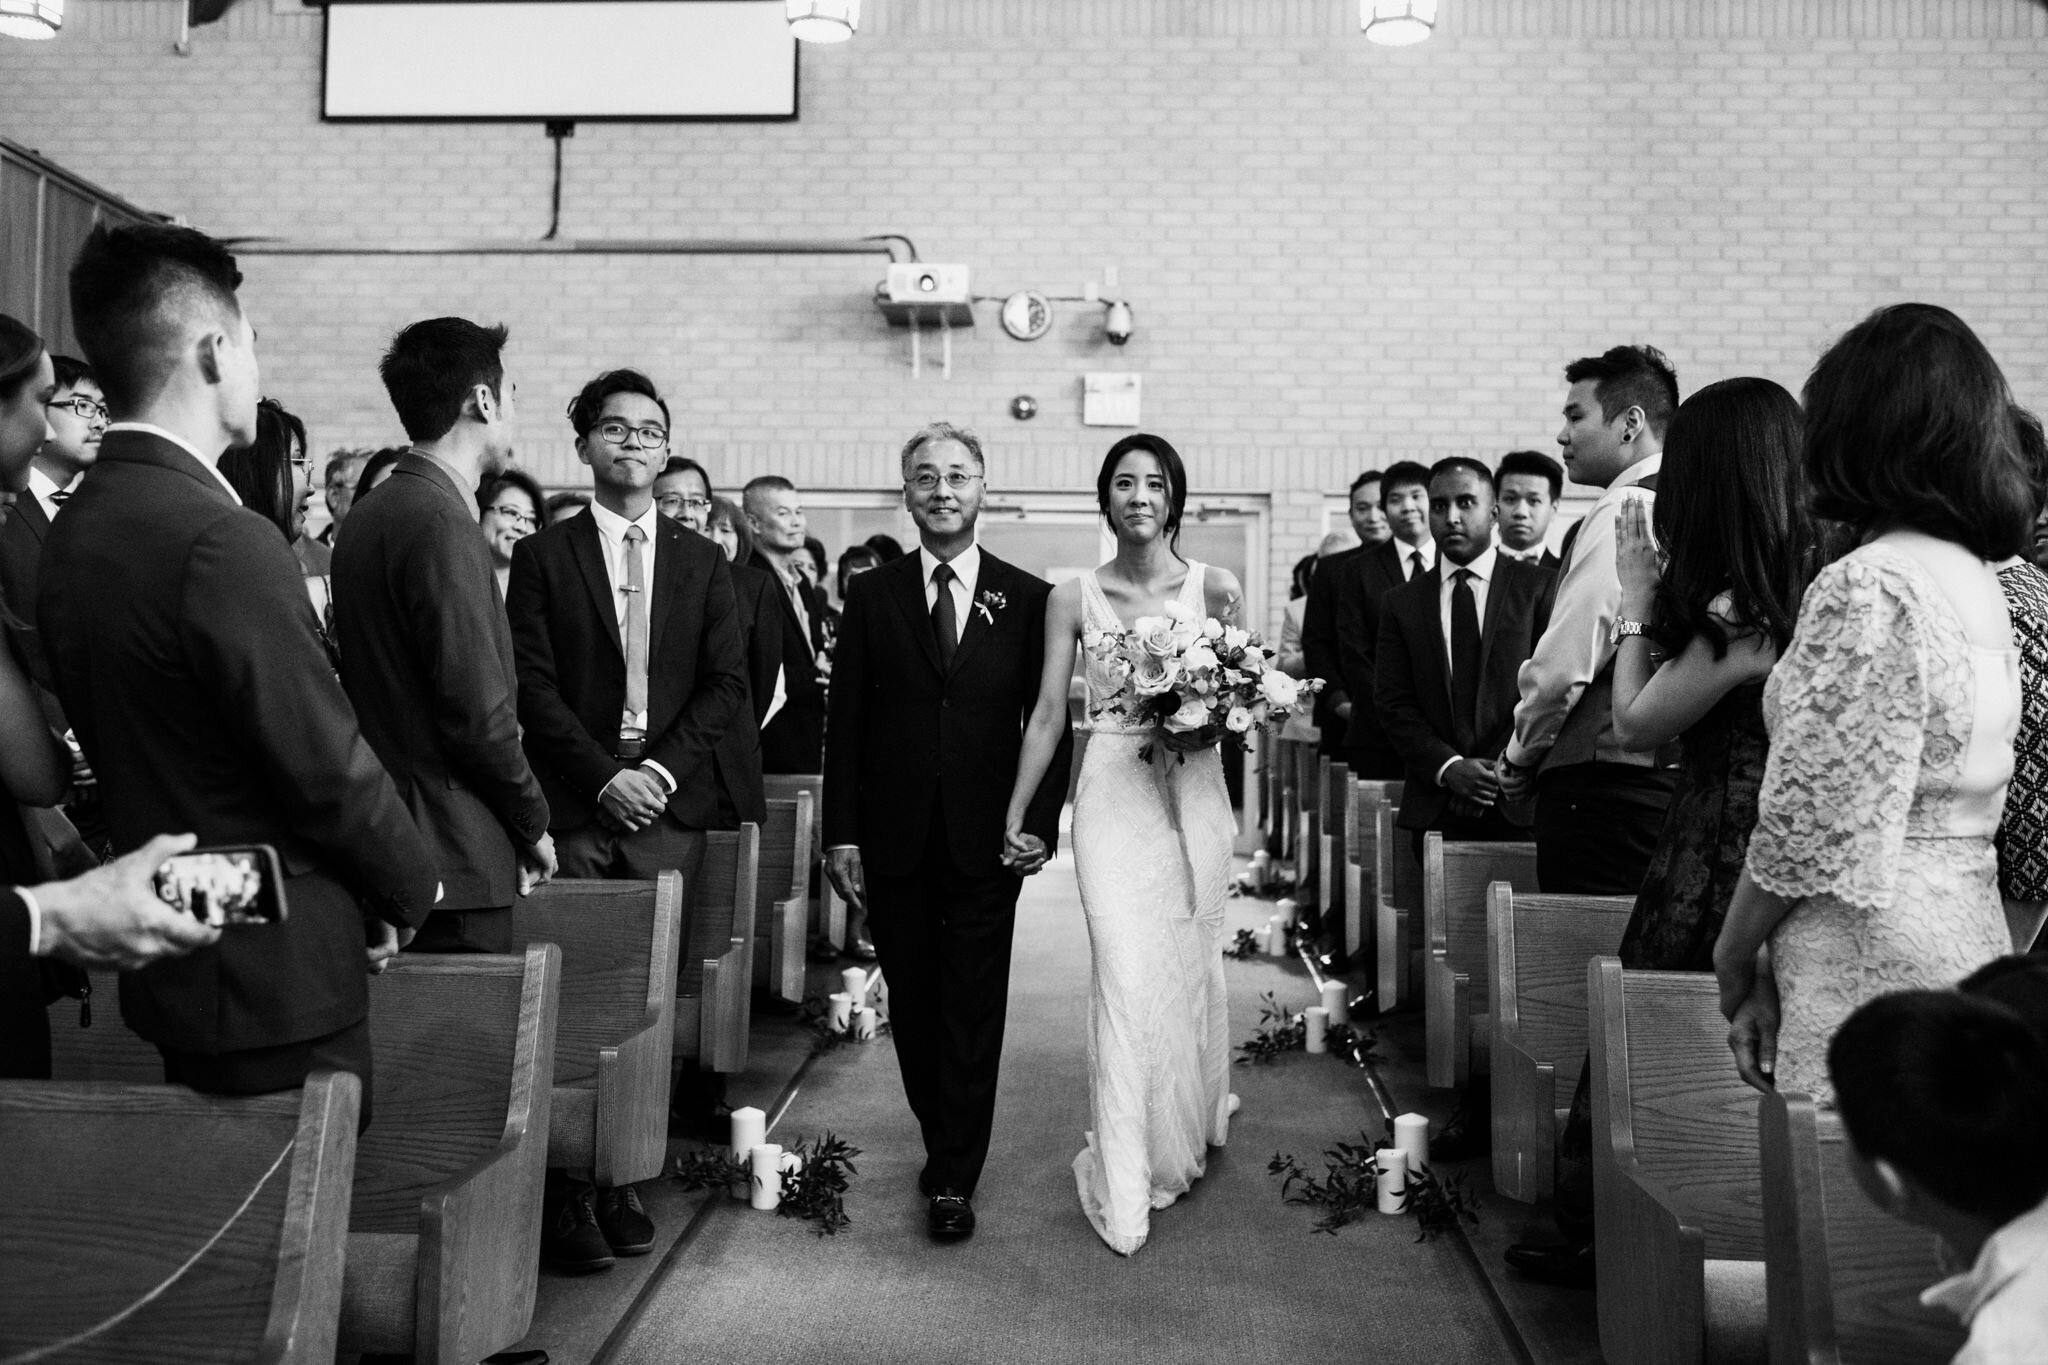 169-father-bride-aisle-wedding-ceremony-photos-toronto-church-emotional-brewery-reception.jpg